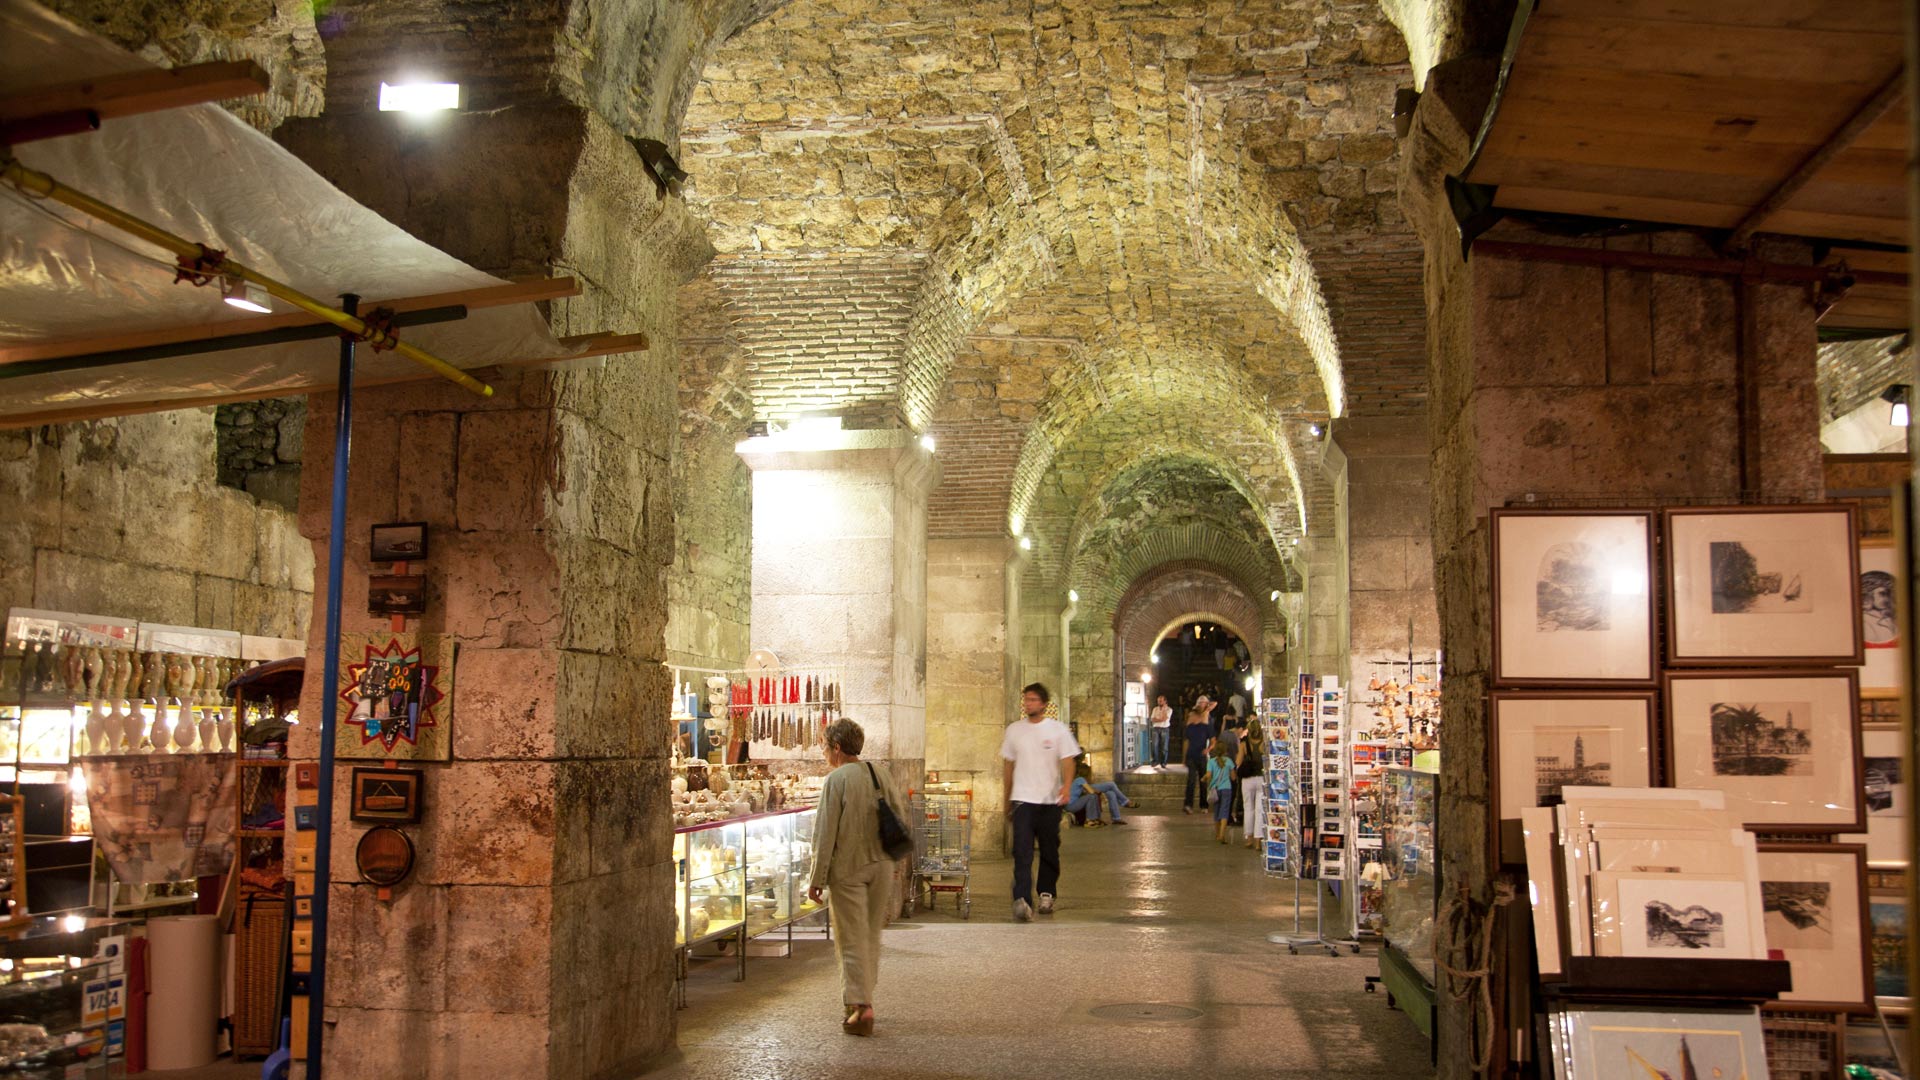 Ground floor passage way of the Diocletian Palace, Split, Split-Dalmatia, Croatia